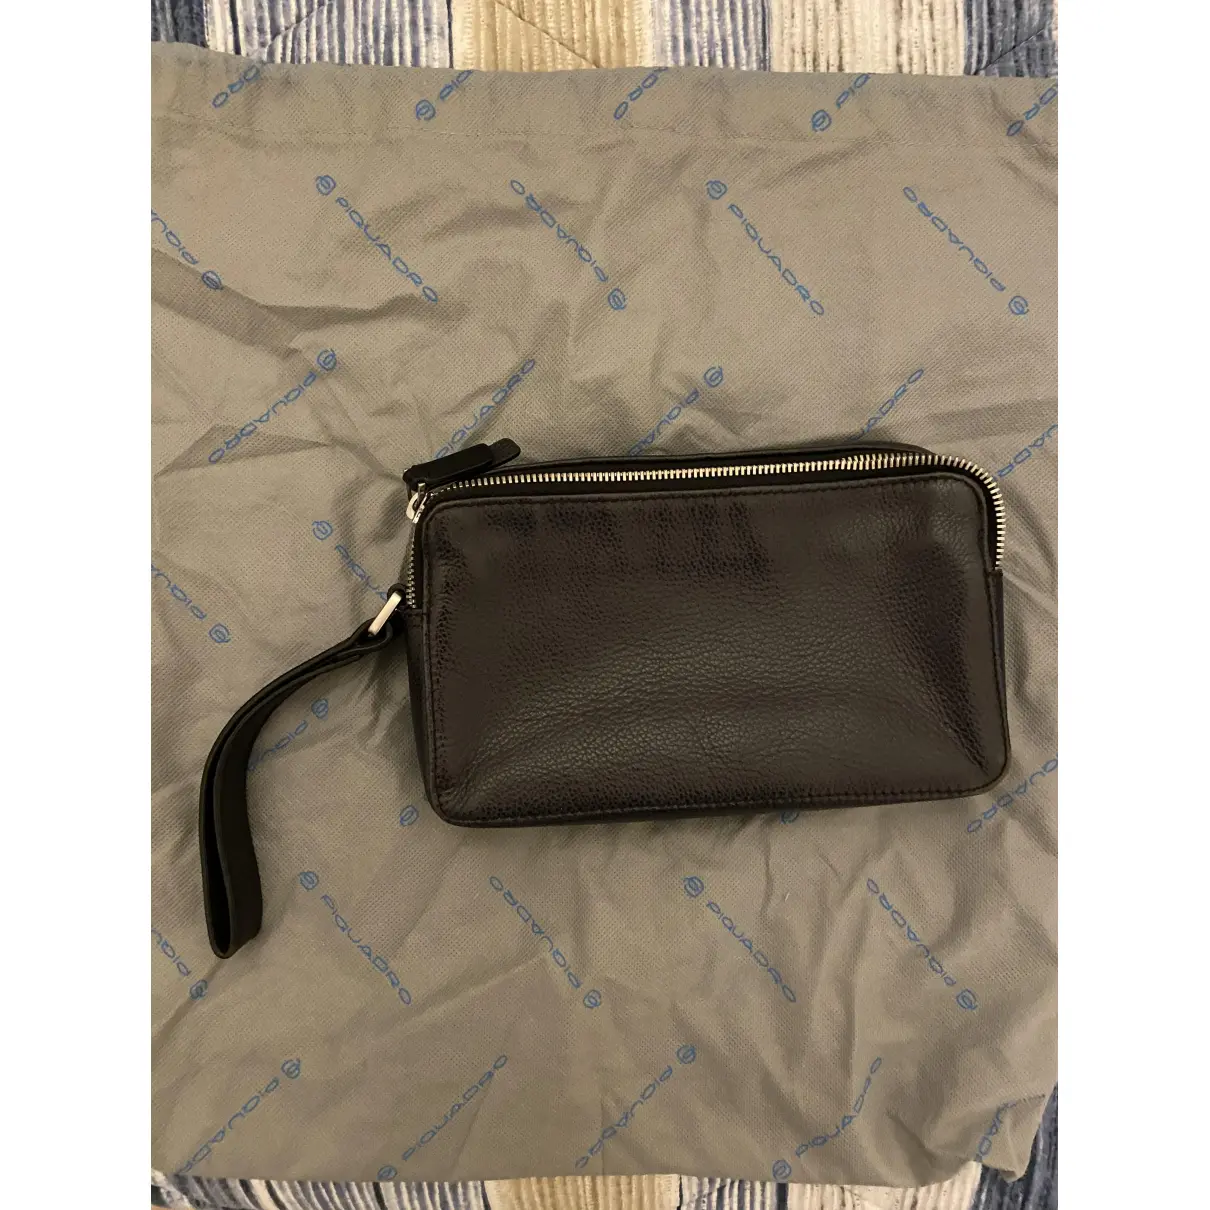 Leather travel bag Piquadro